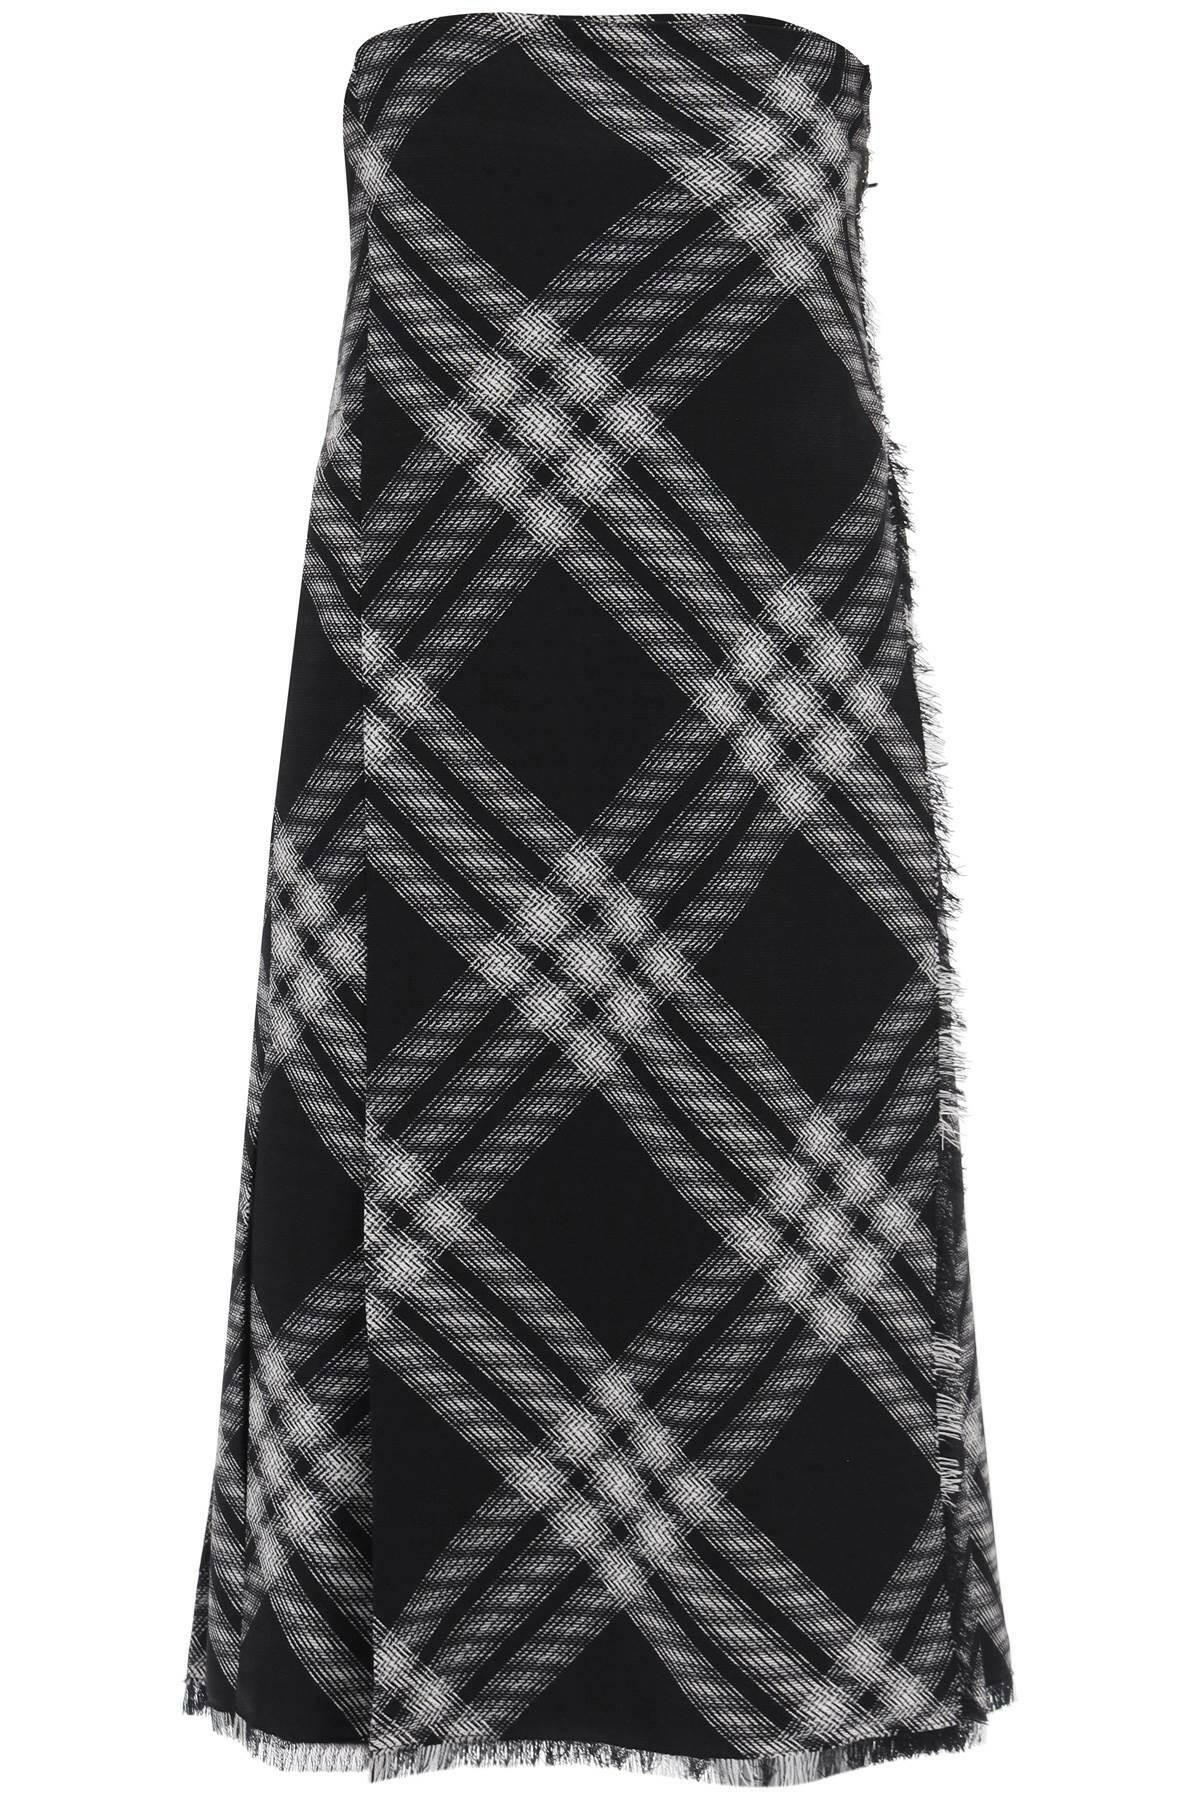 Burberry Monochrome Check Wool Kilt Dress - JOHN JULIA